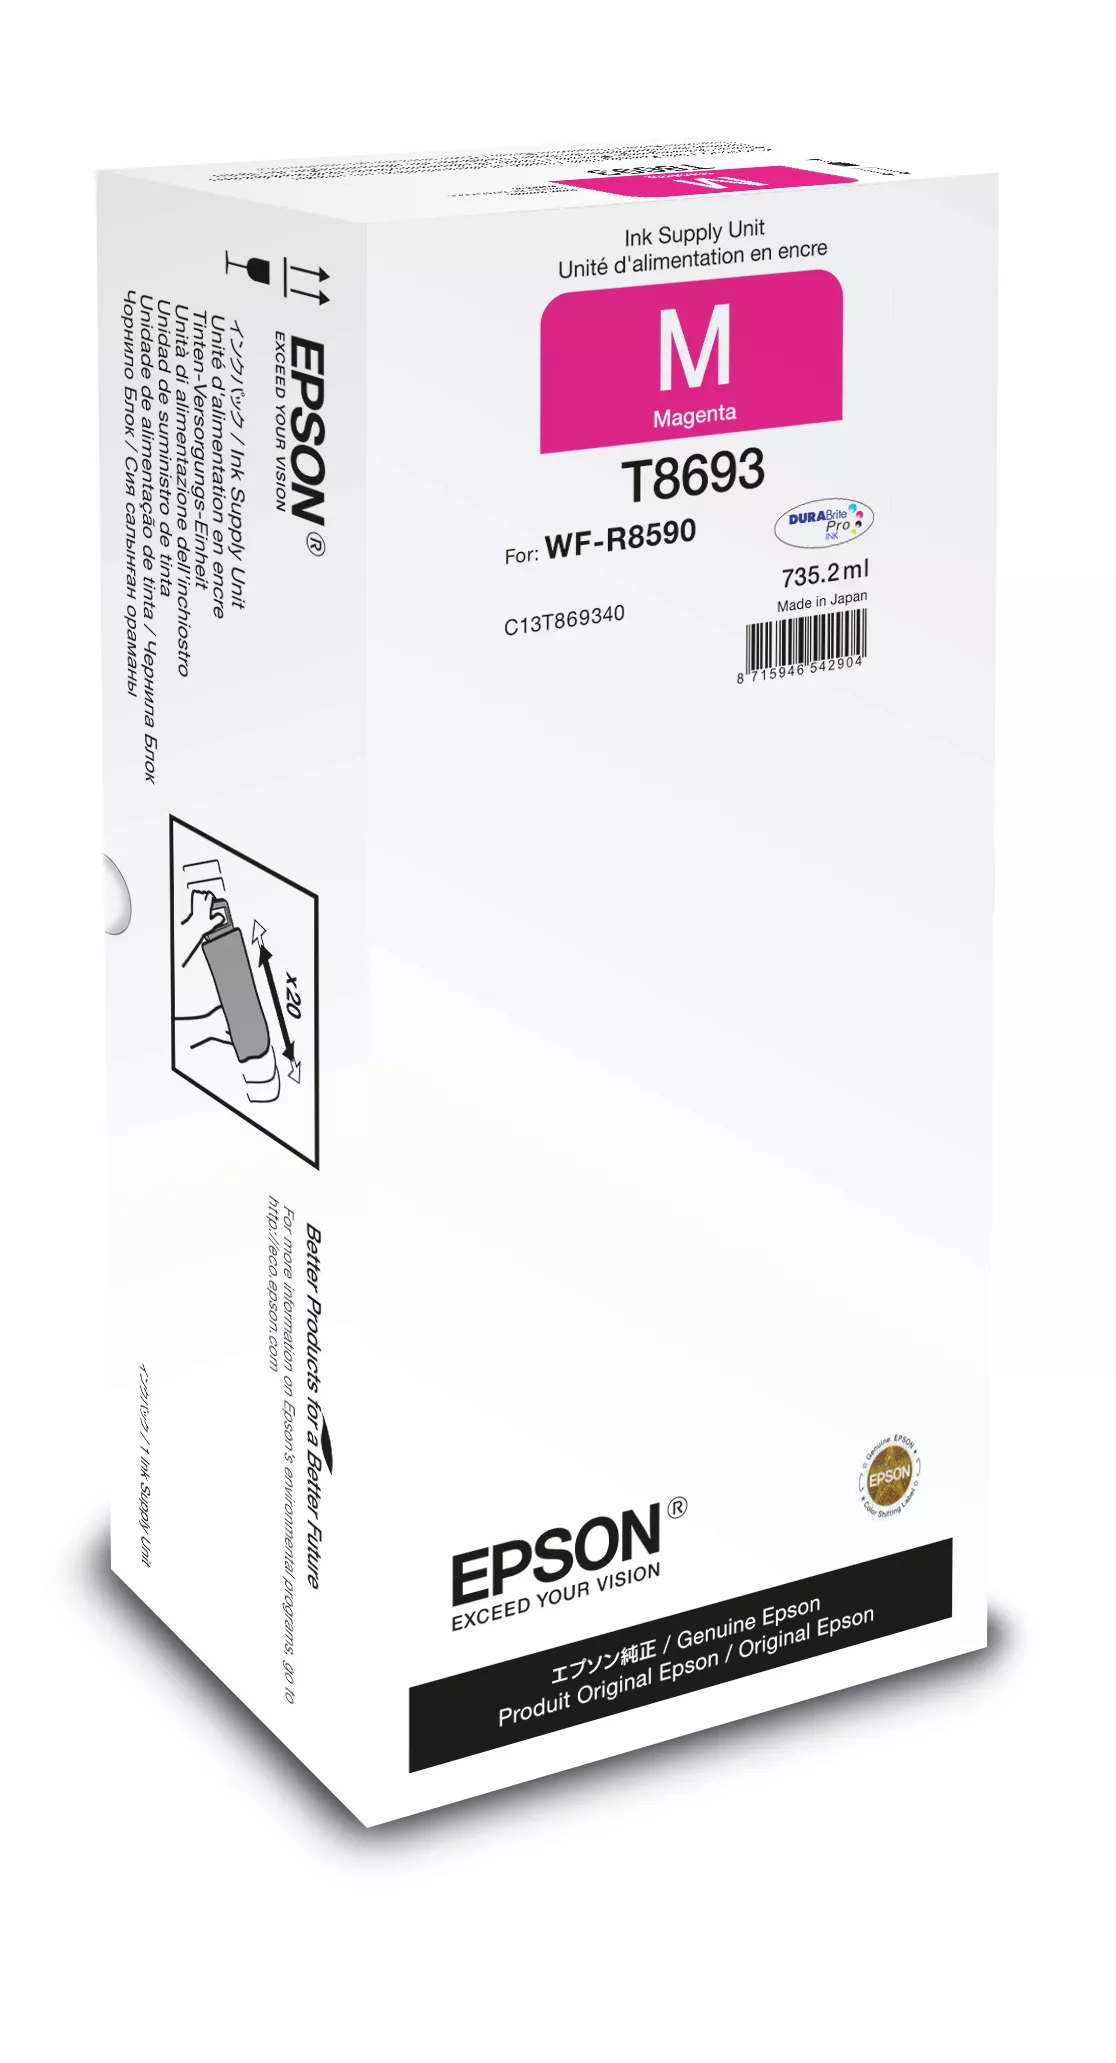 Revendeur officiel Cartouches d'encre EPSON WorkForce Pro WF-R8590 Magenta XXL Ink Supply